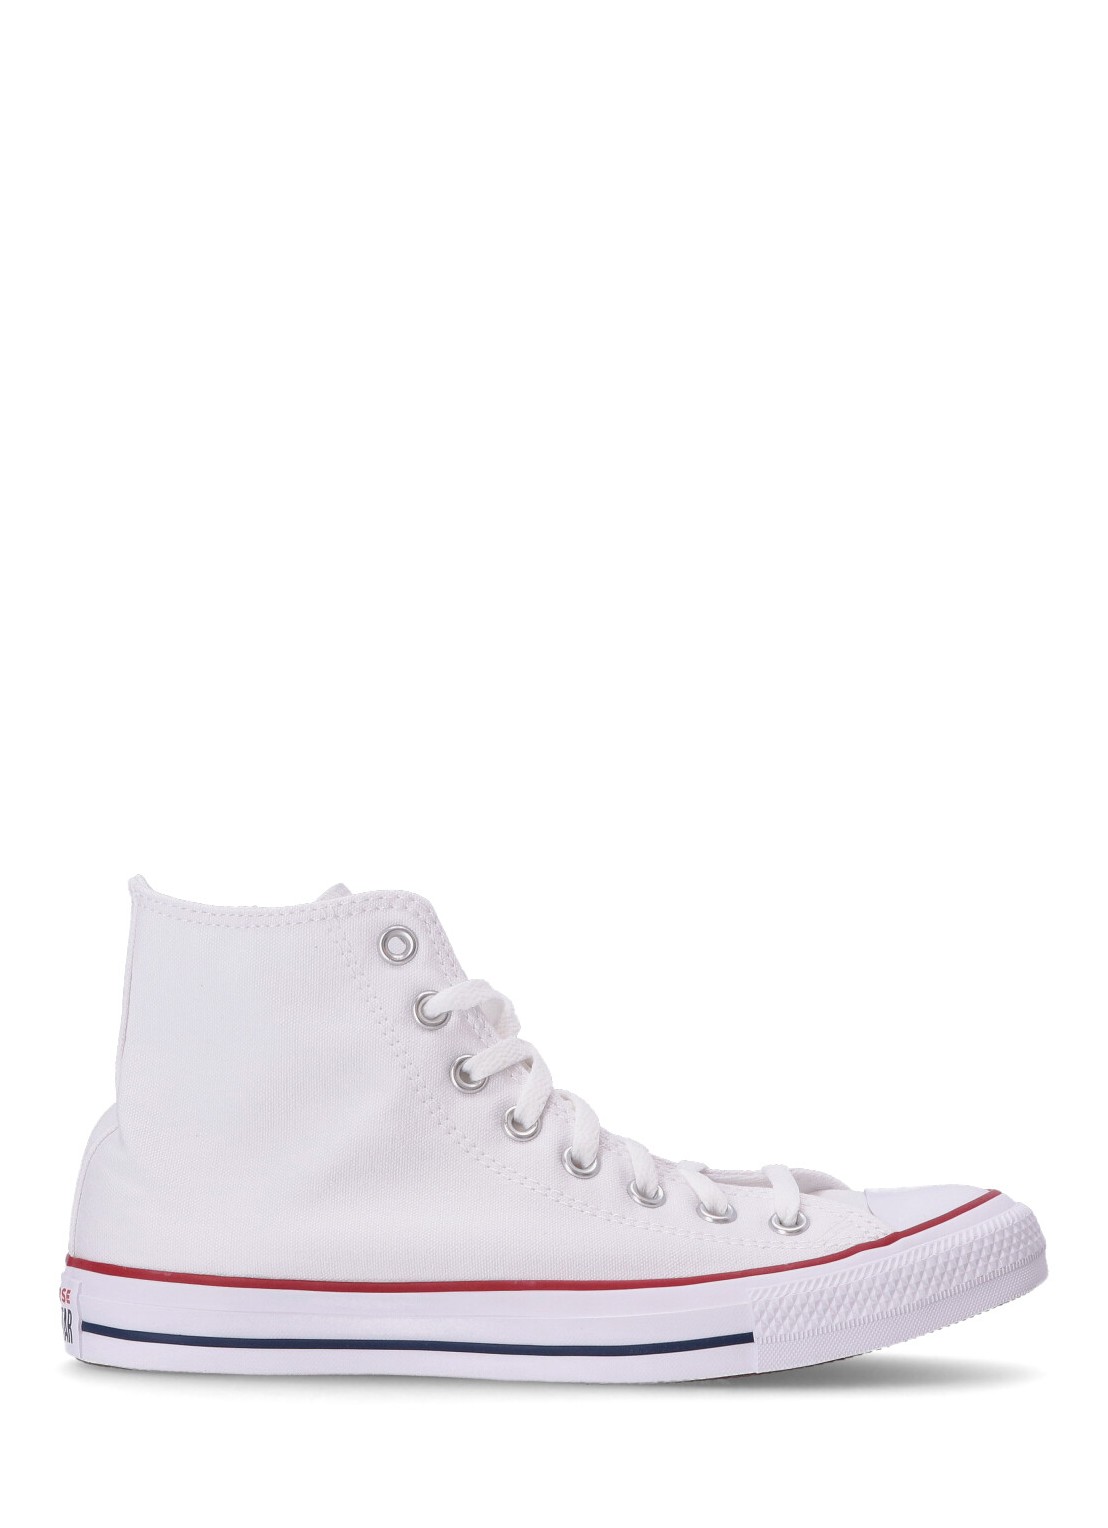 Sneaker converse sneaker woman all star hi m7650c optical white talla blanco
 